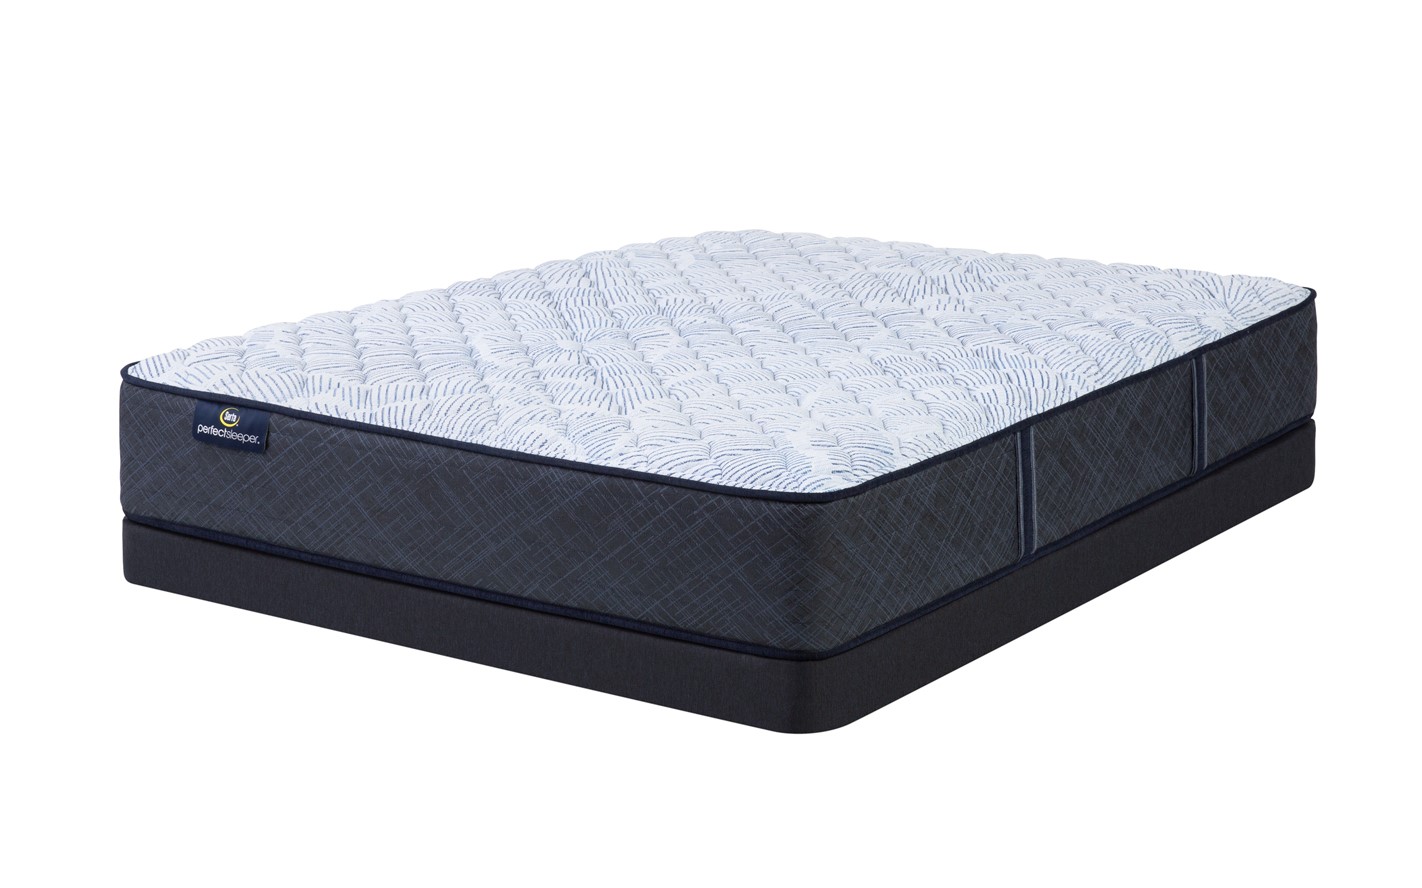 Photo of the Serta Perfect Sleeper Blue Lagoon Nights Firm mattress.